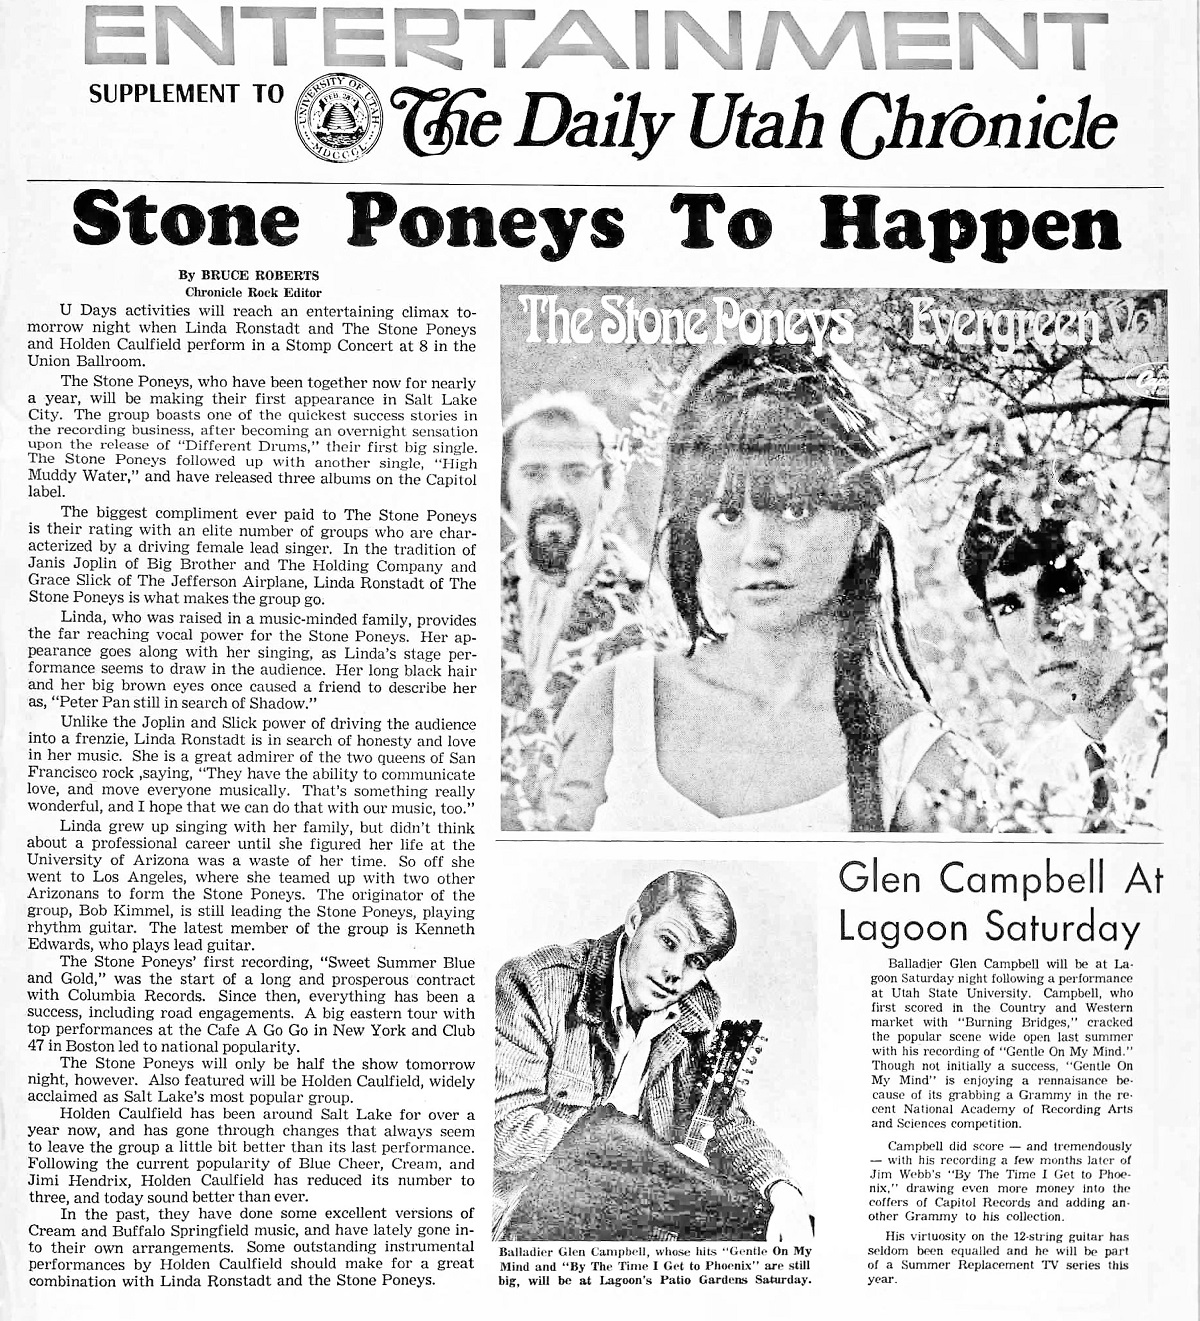 Linda Ronstadt and Stone Poneys